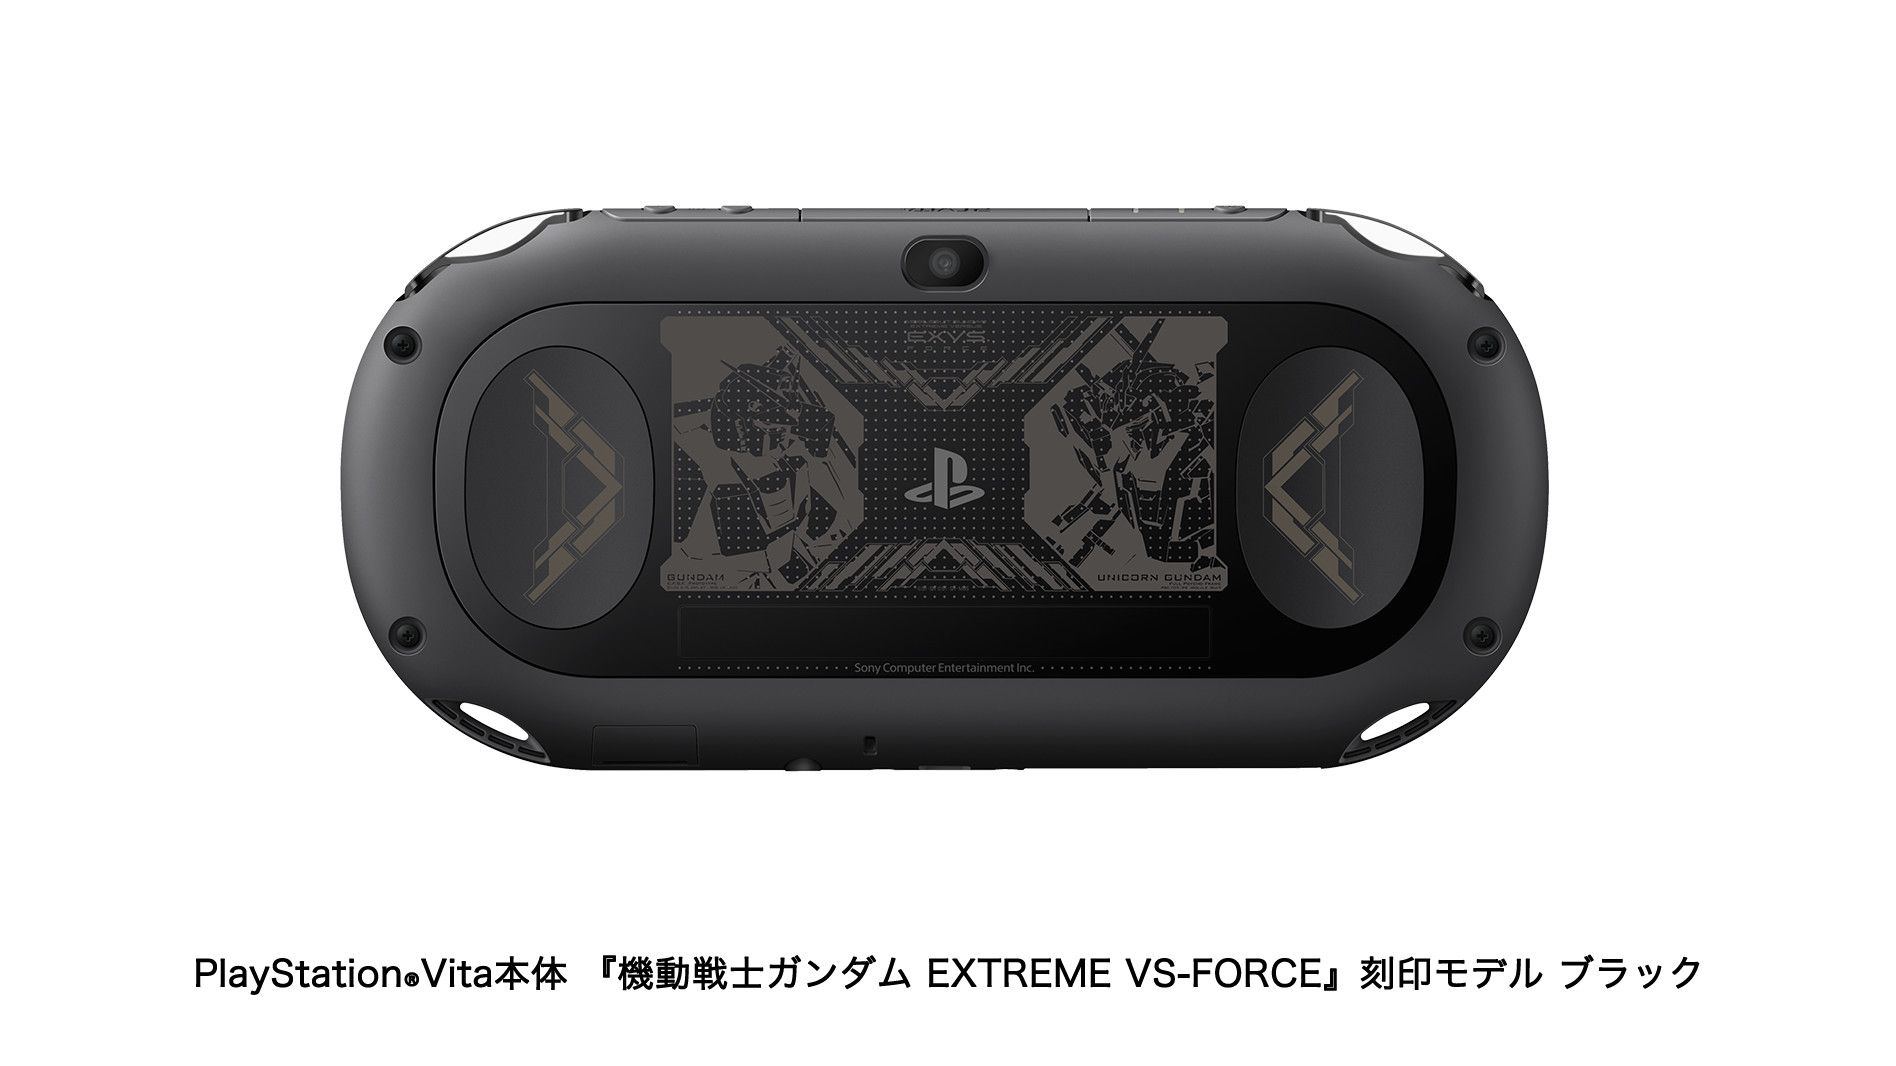 PlayStation Vita [Mobile Suit Gundam Extreme VS Force Premium